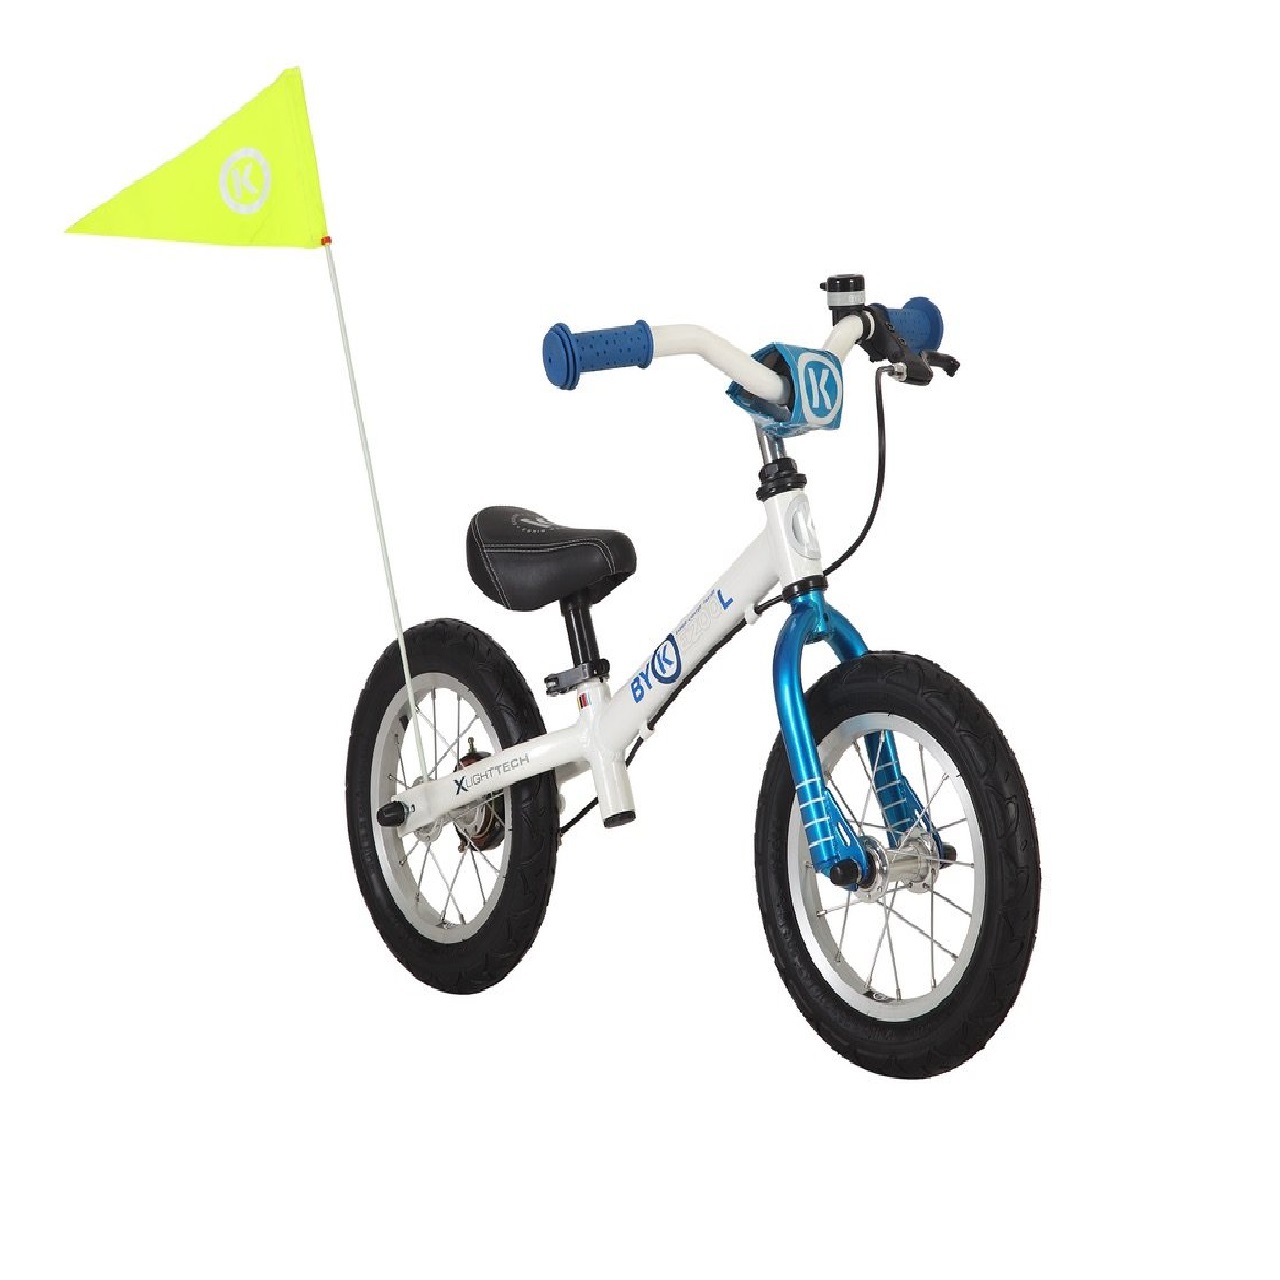 ByK Kids Balance Bike E-200L Age: 2-4 Years Learning to ride bike